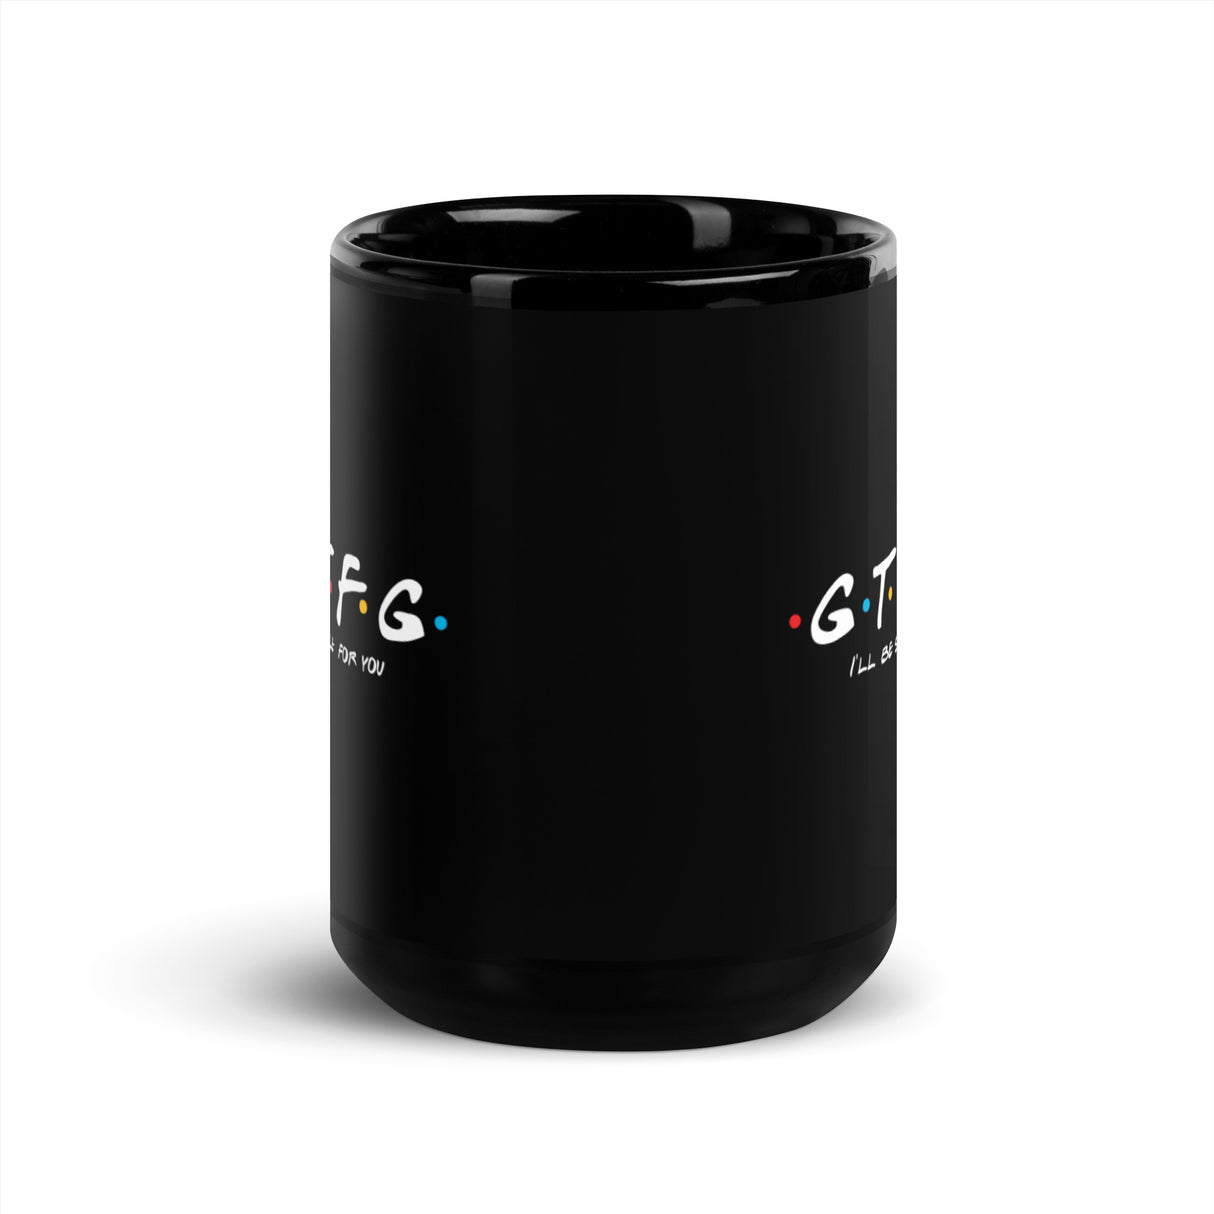 GTTFG (Friends Logo) Mug